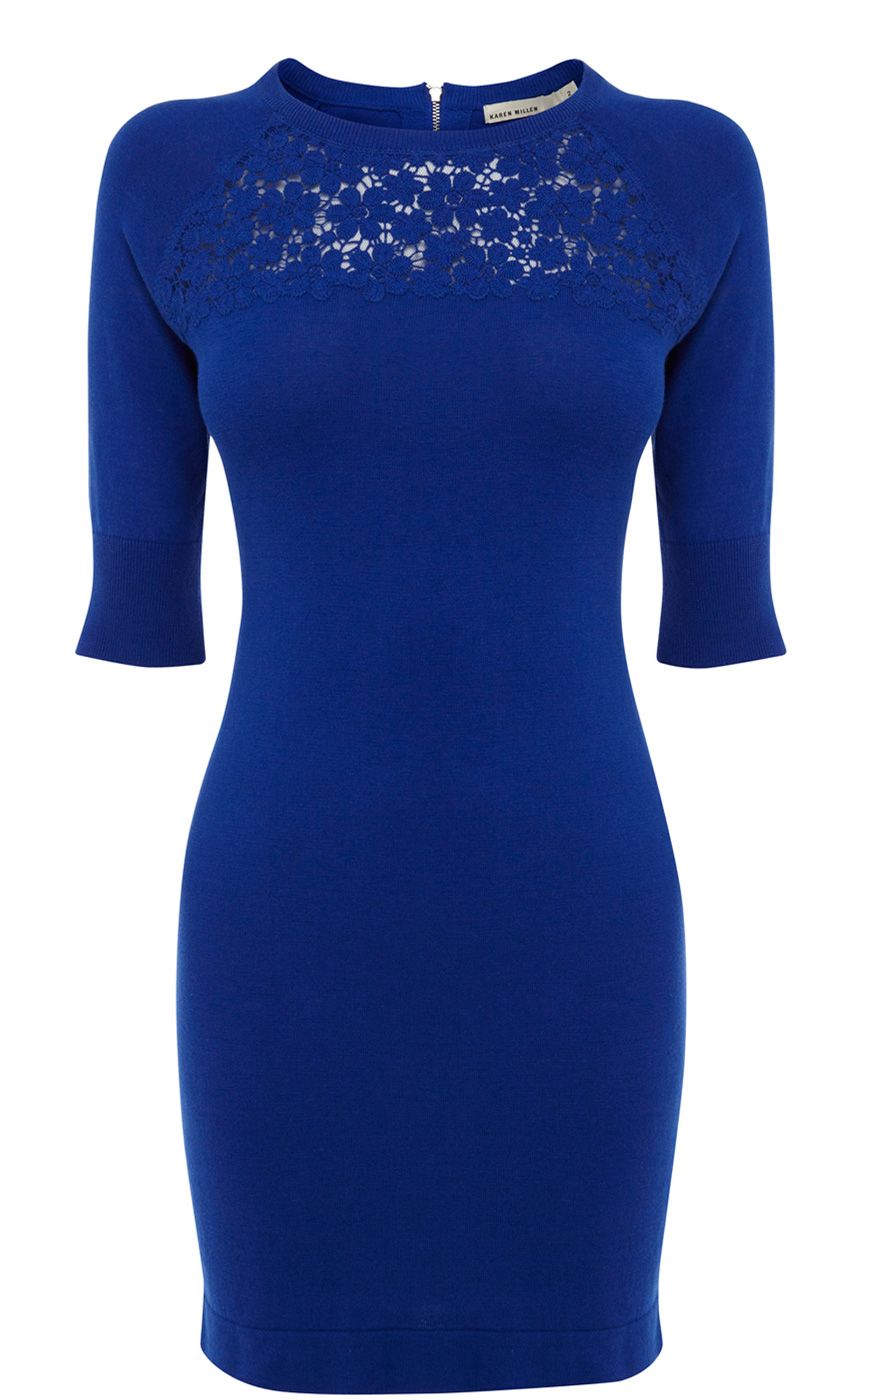 Karen Millen Lace Insert Dress in Blue | Lyst